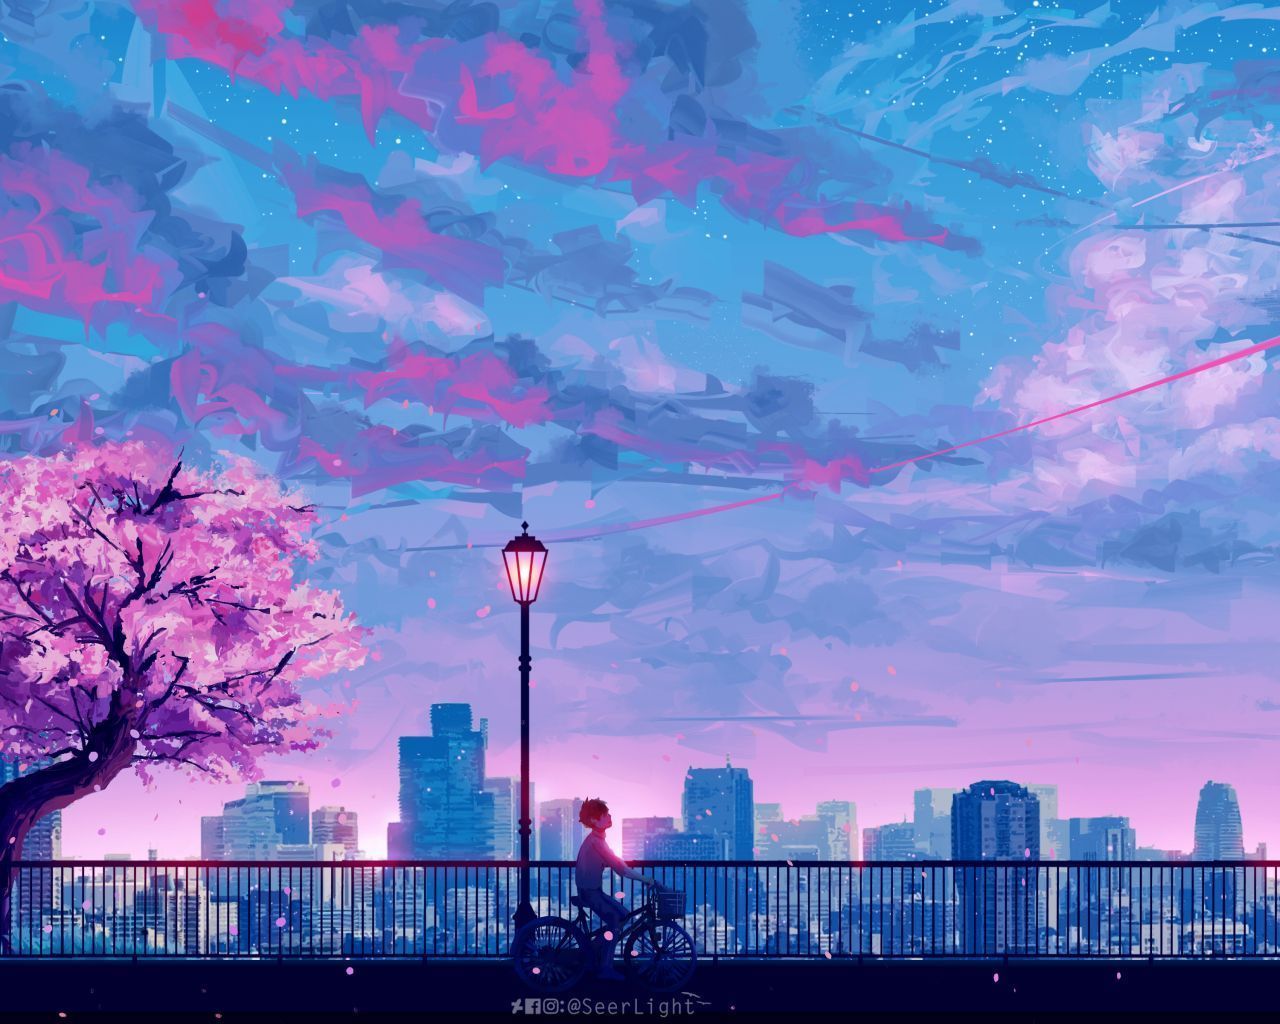 City 4k Anime Art 1280x1024 Resolution Wallpaper, HD Artist 4K Wallpaper, Image, Photo and Background